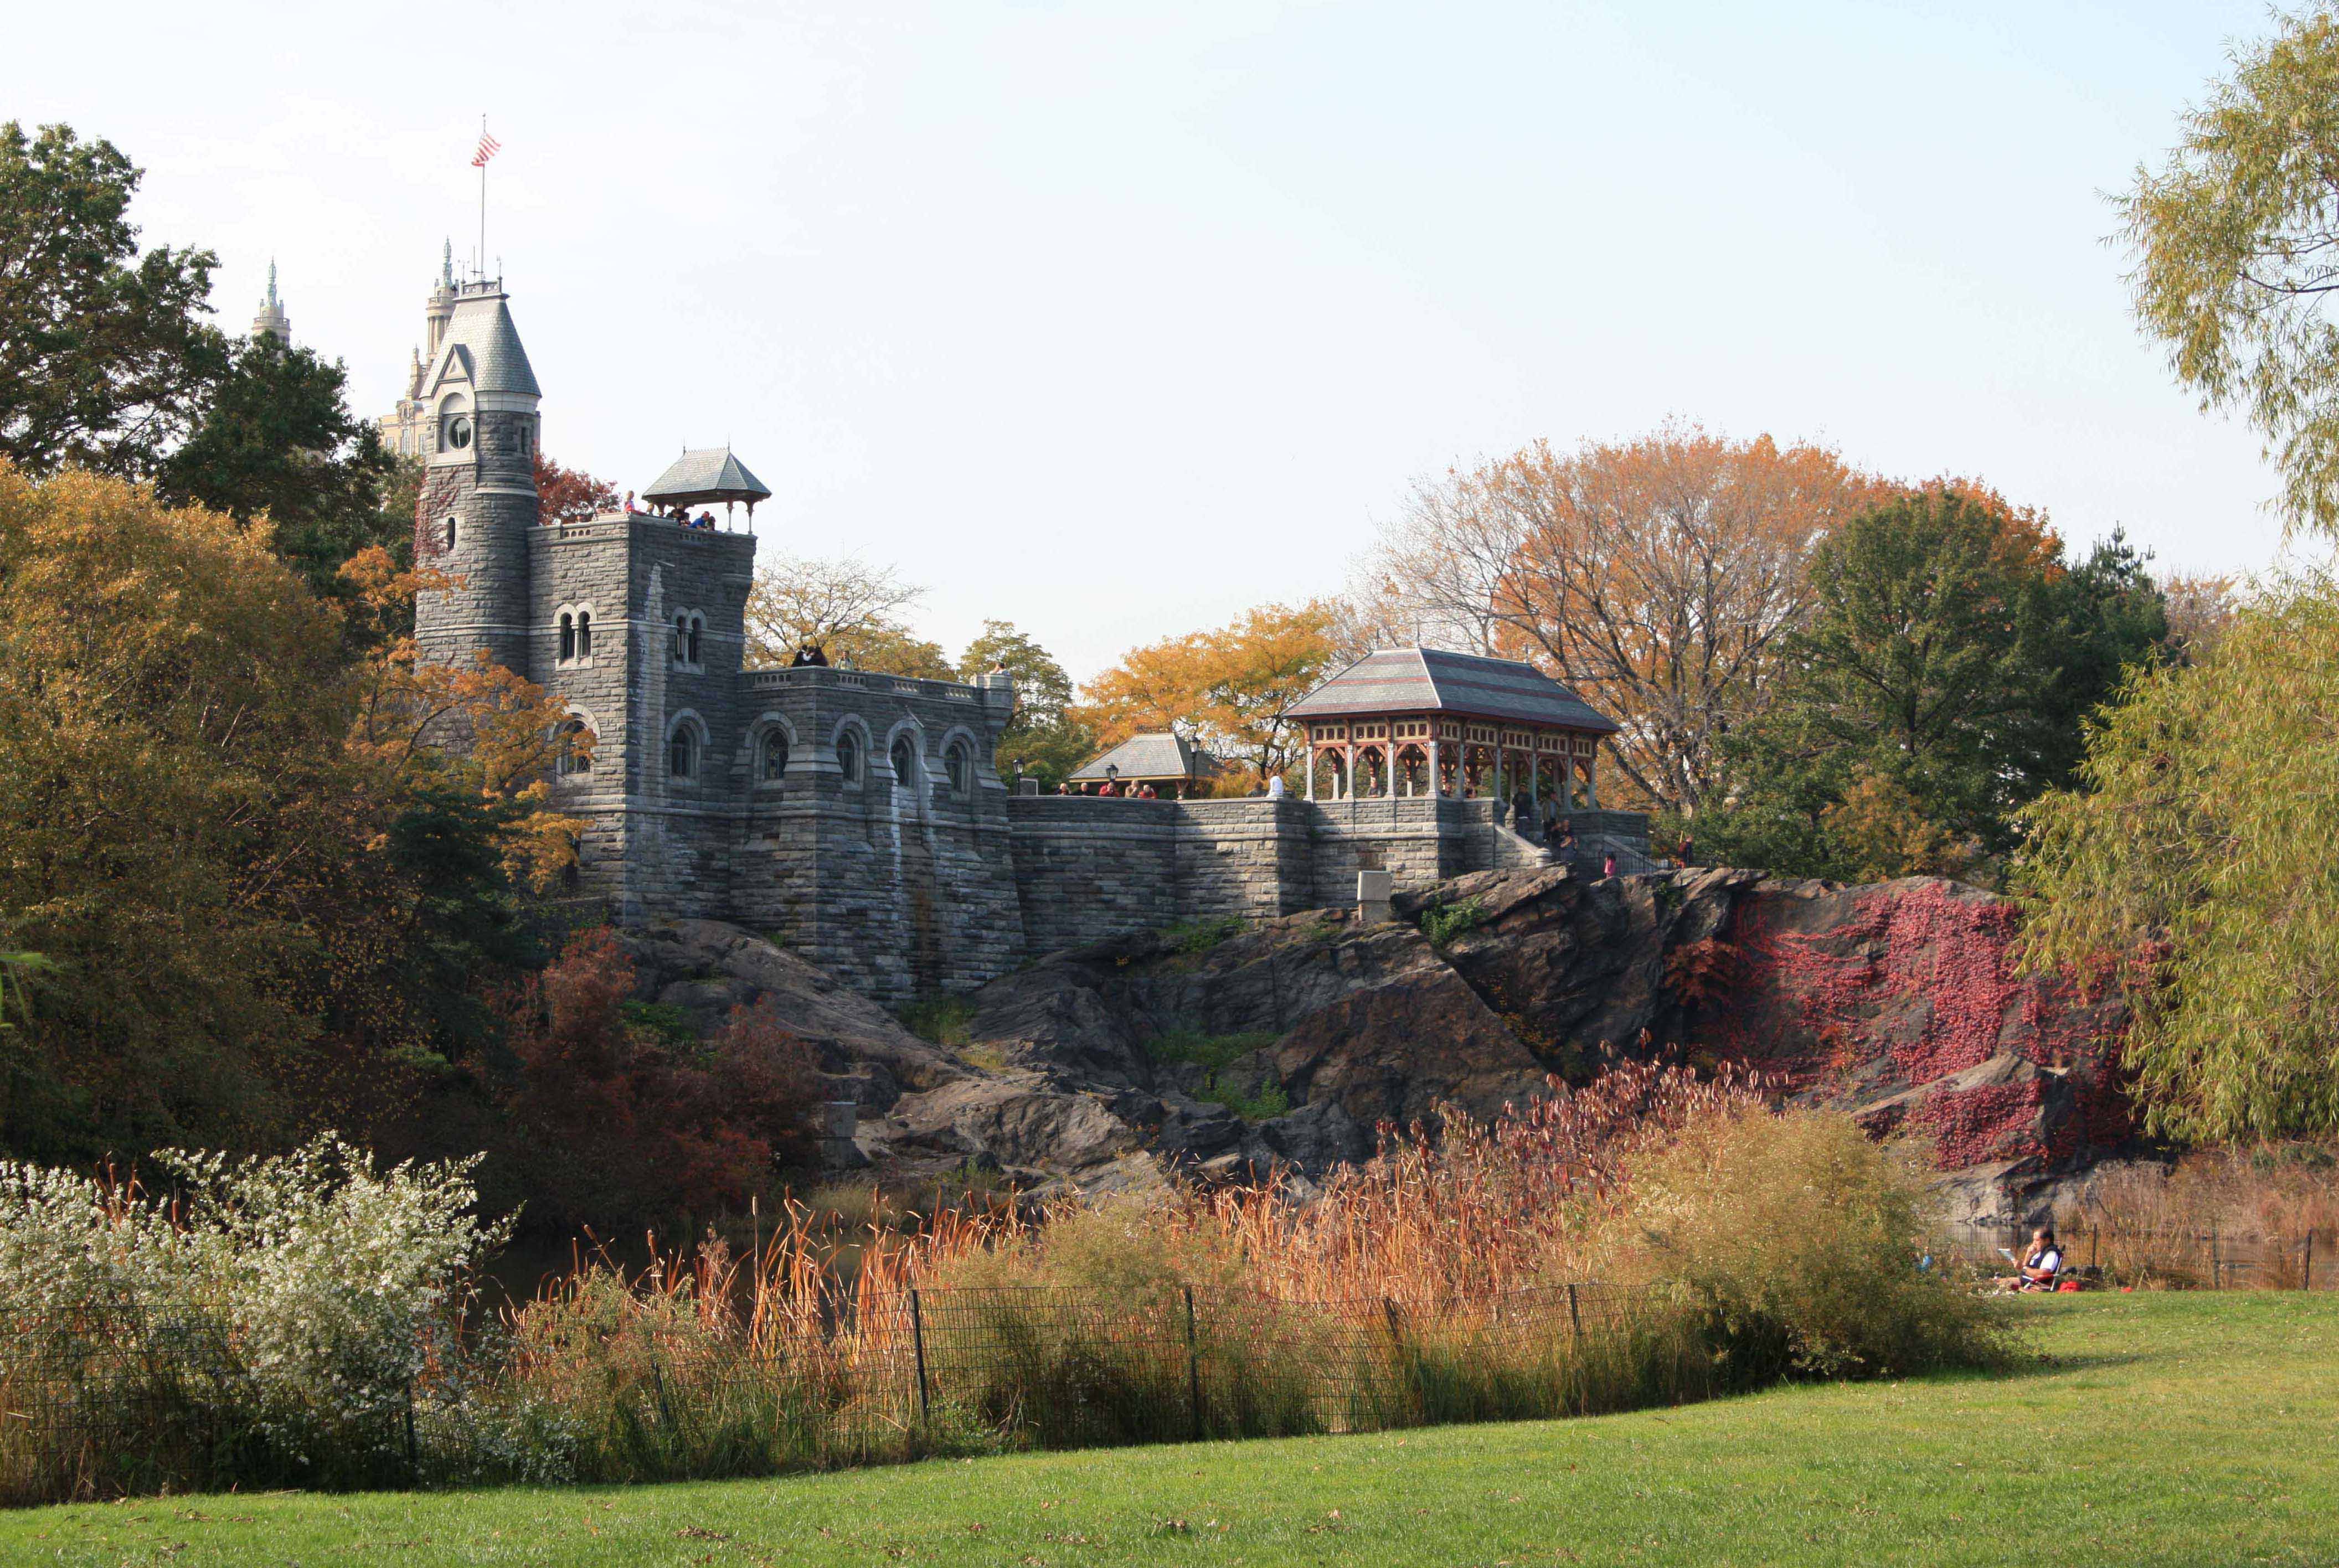 Belvedere Castle in Central Park